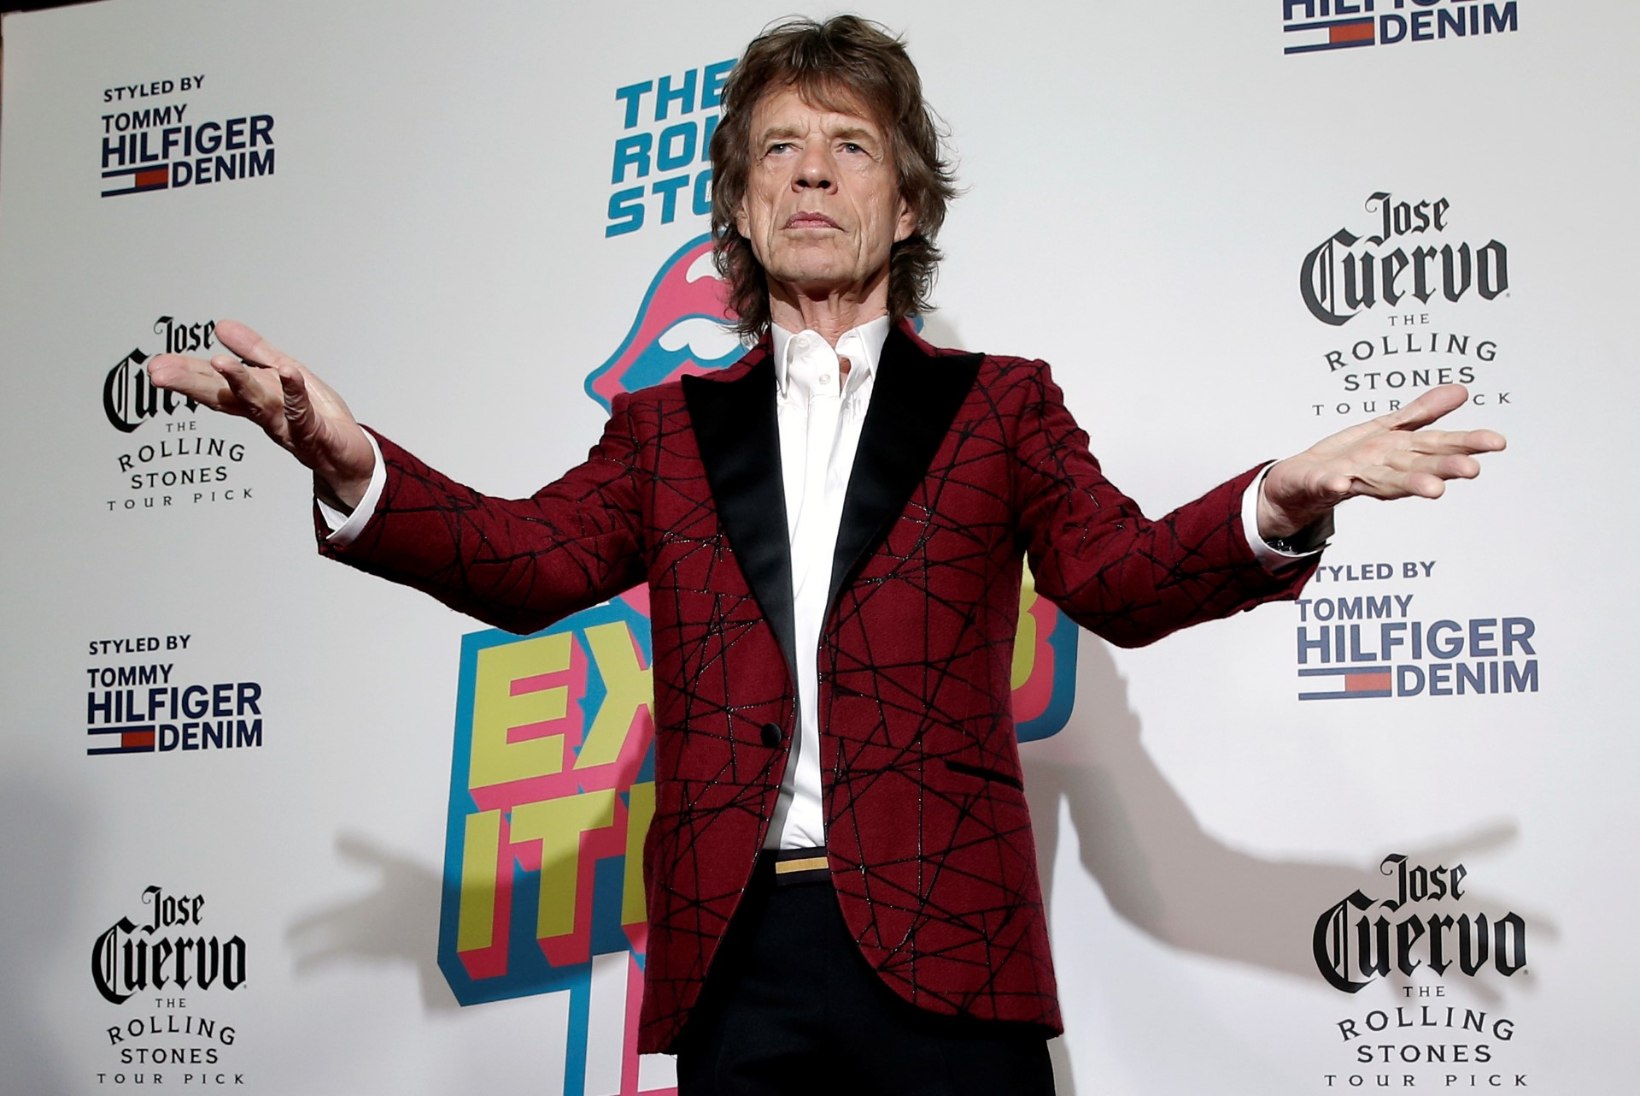 Vene modell eitab salasuhet Mick Jaggeriga